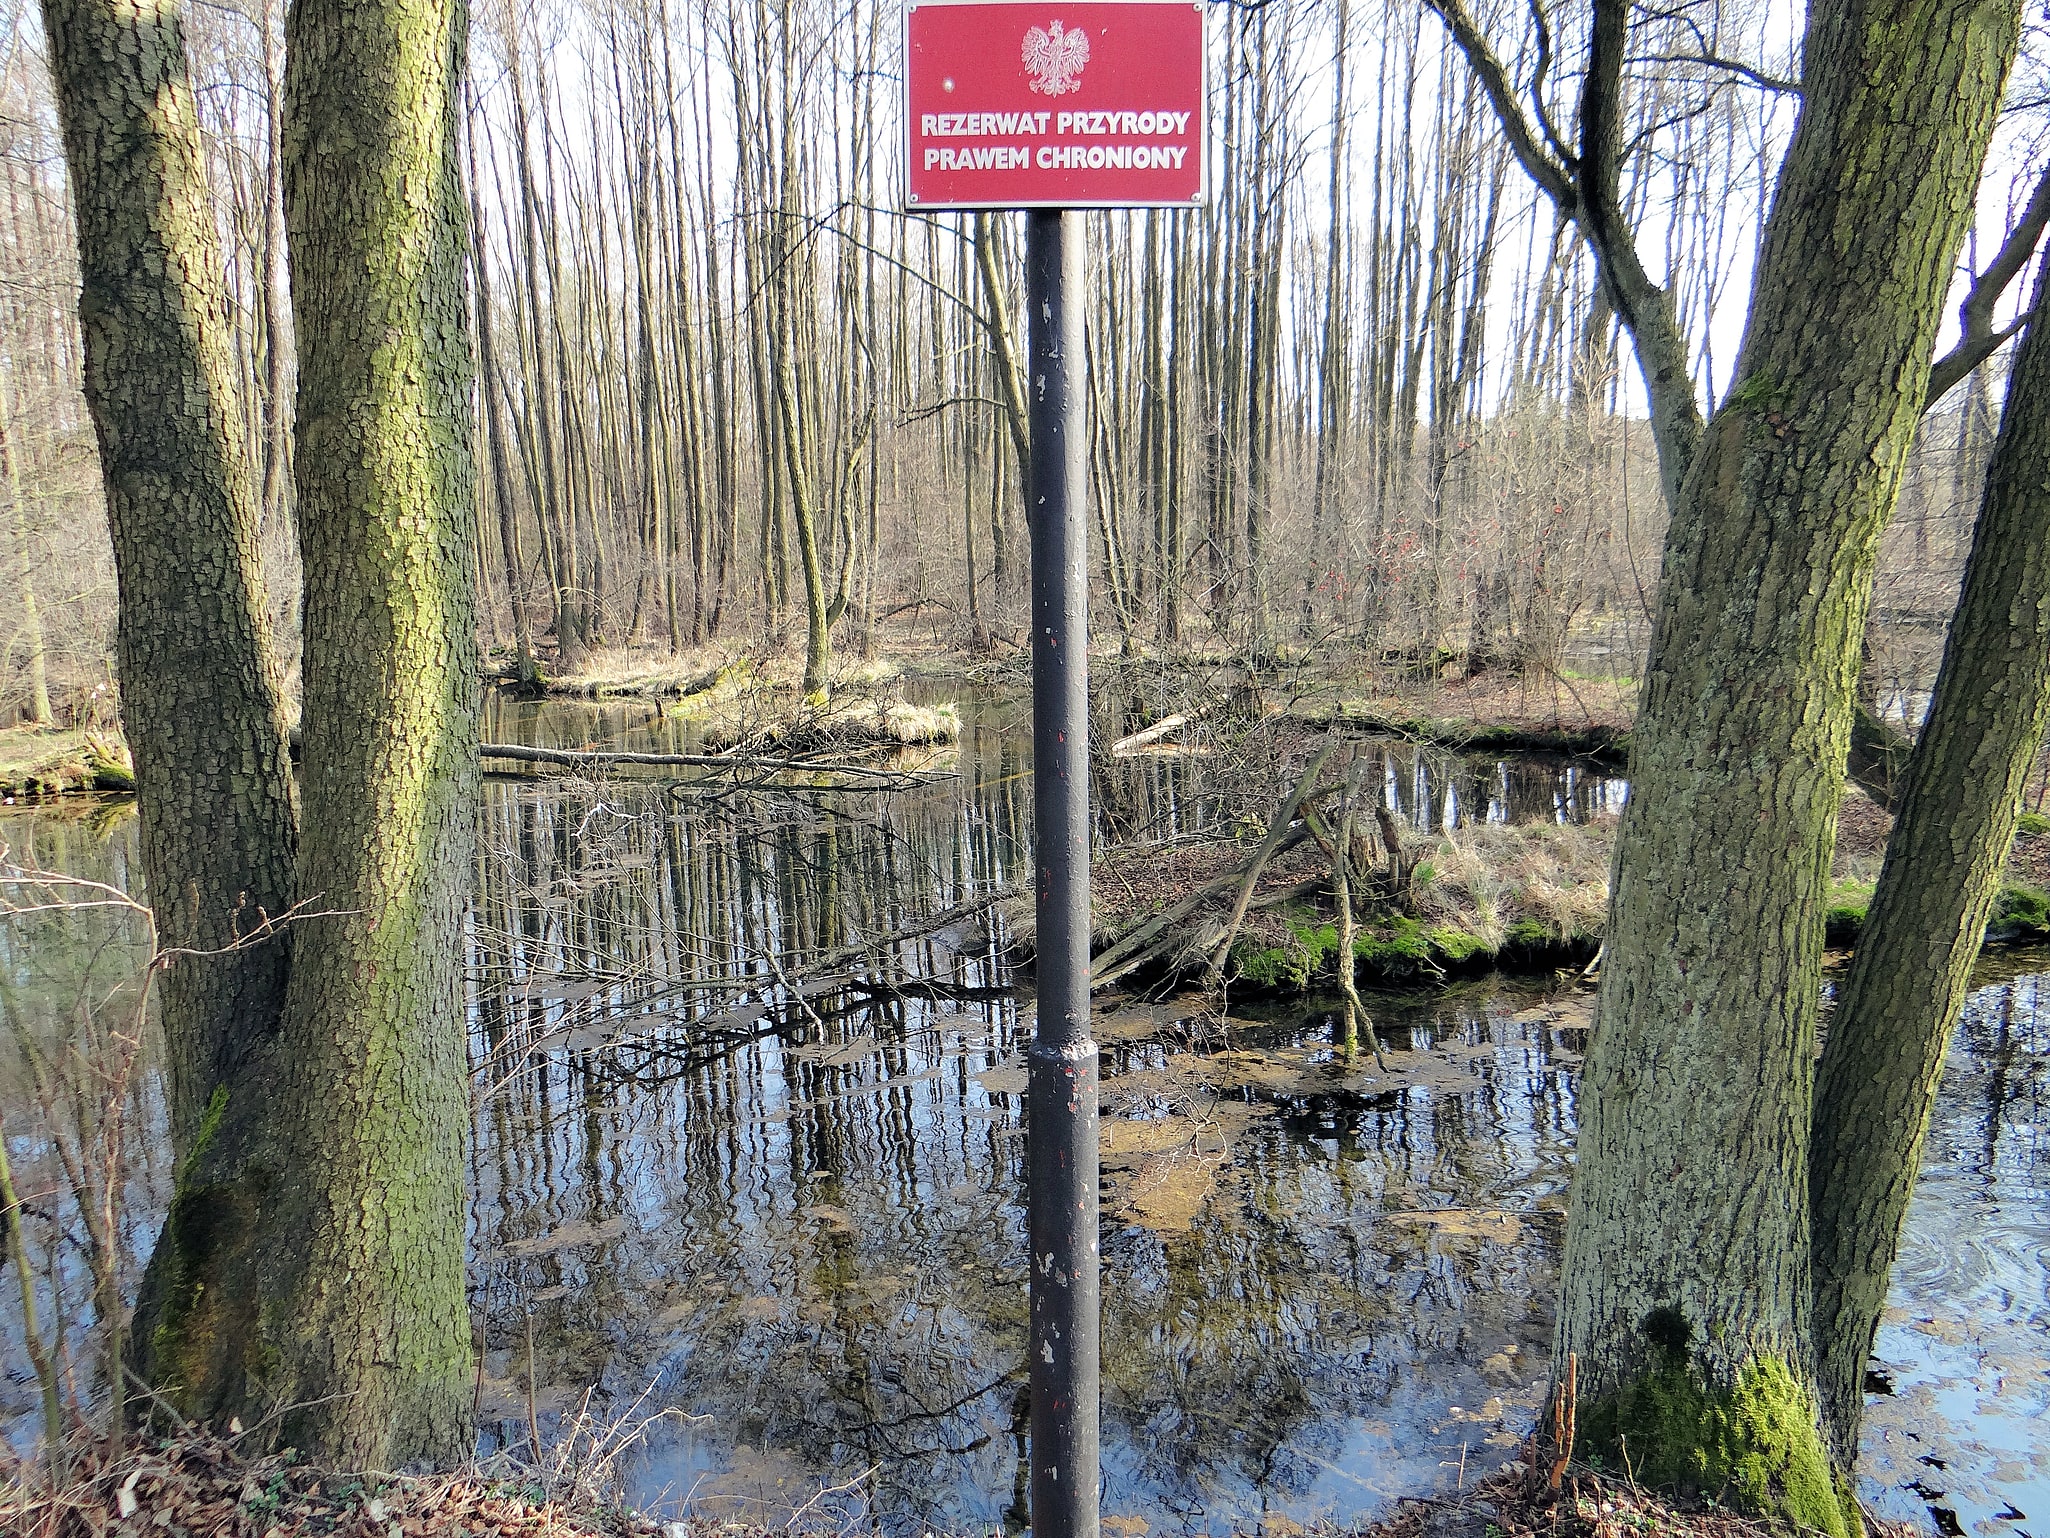 Niebieskie Źródła Nature Reserve, Poland